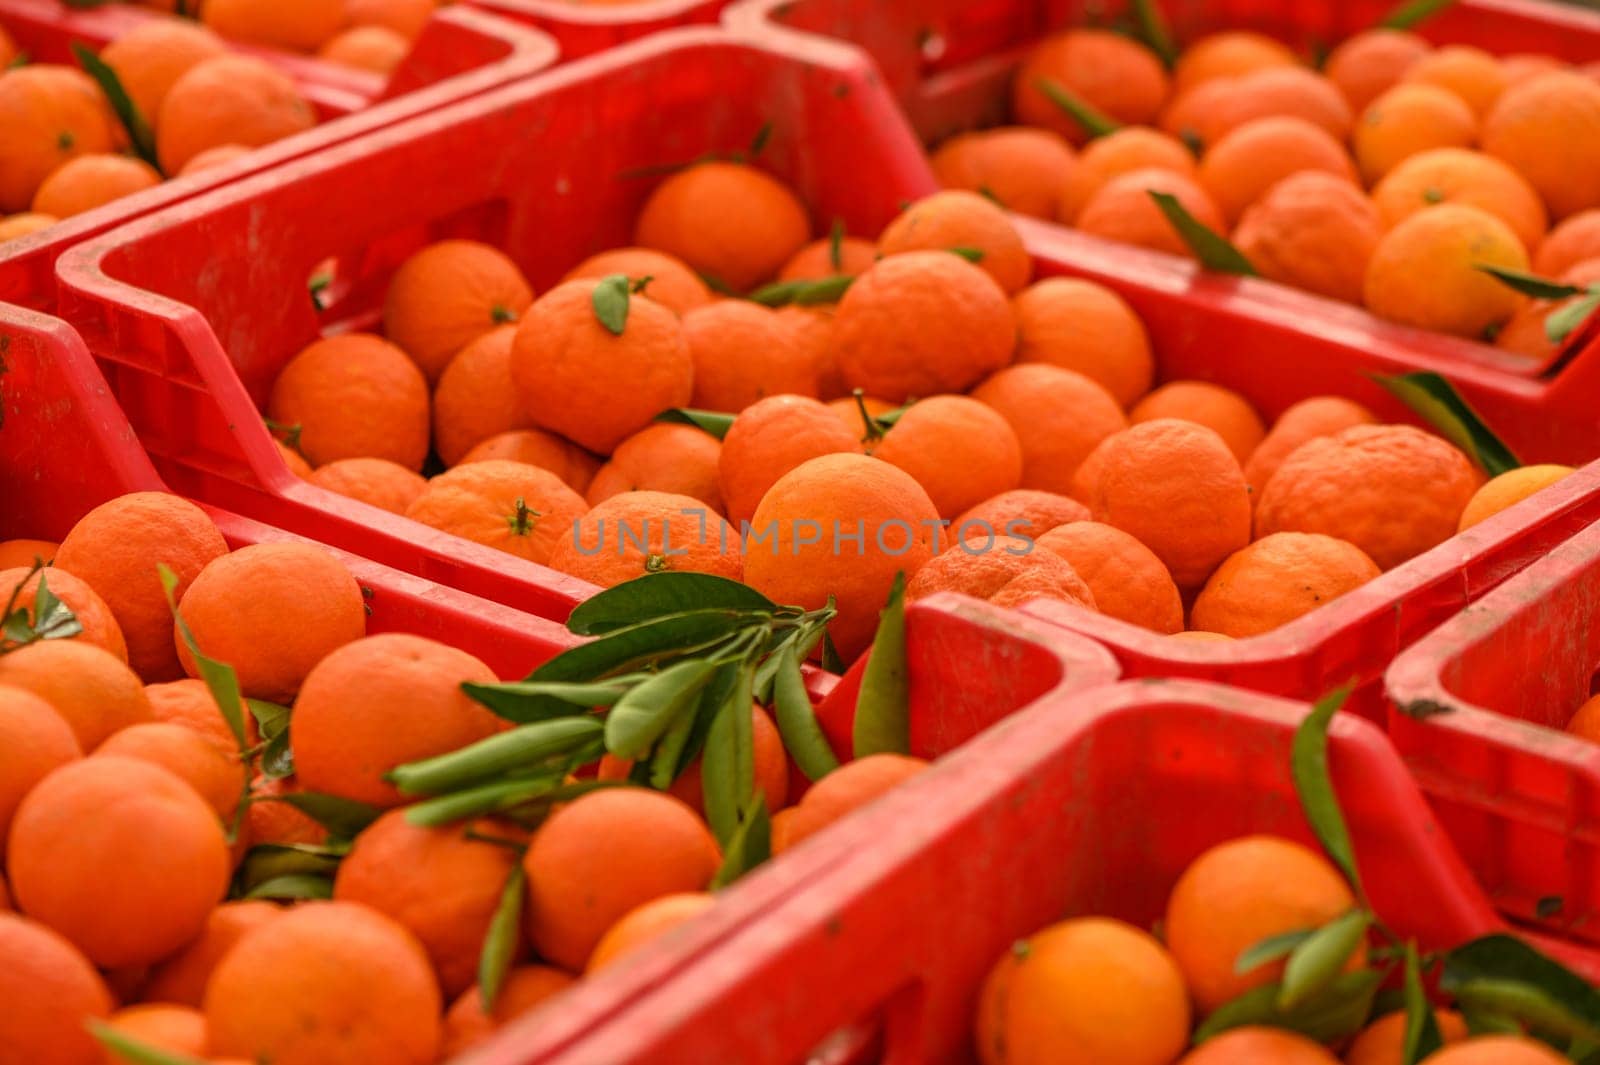 juicy fresh tangerines in boxes for sale in Cyprus in winter 14